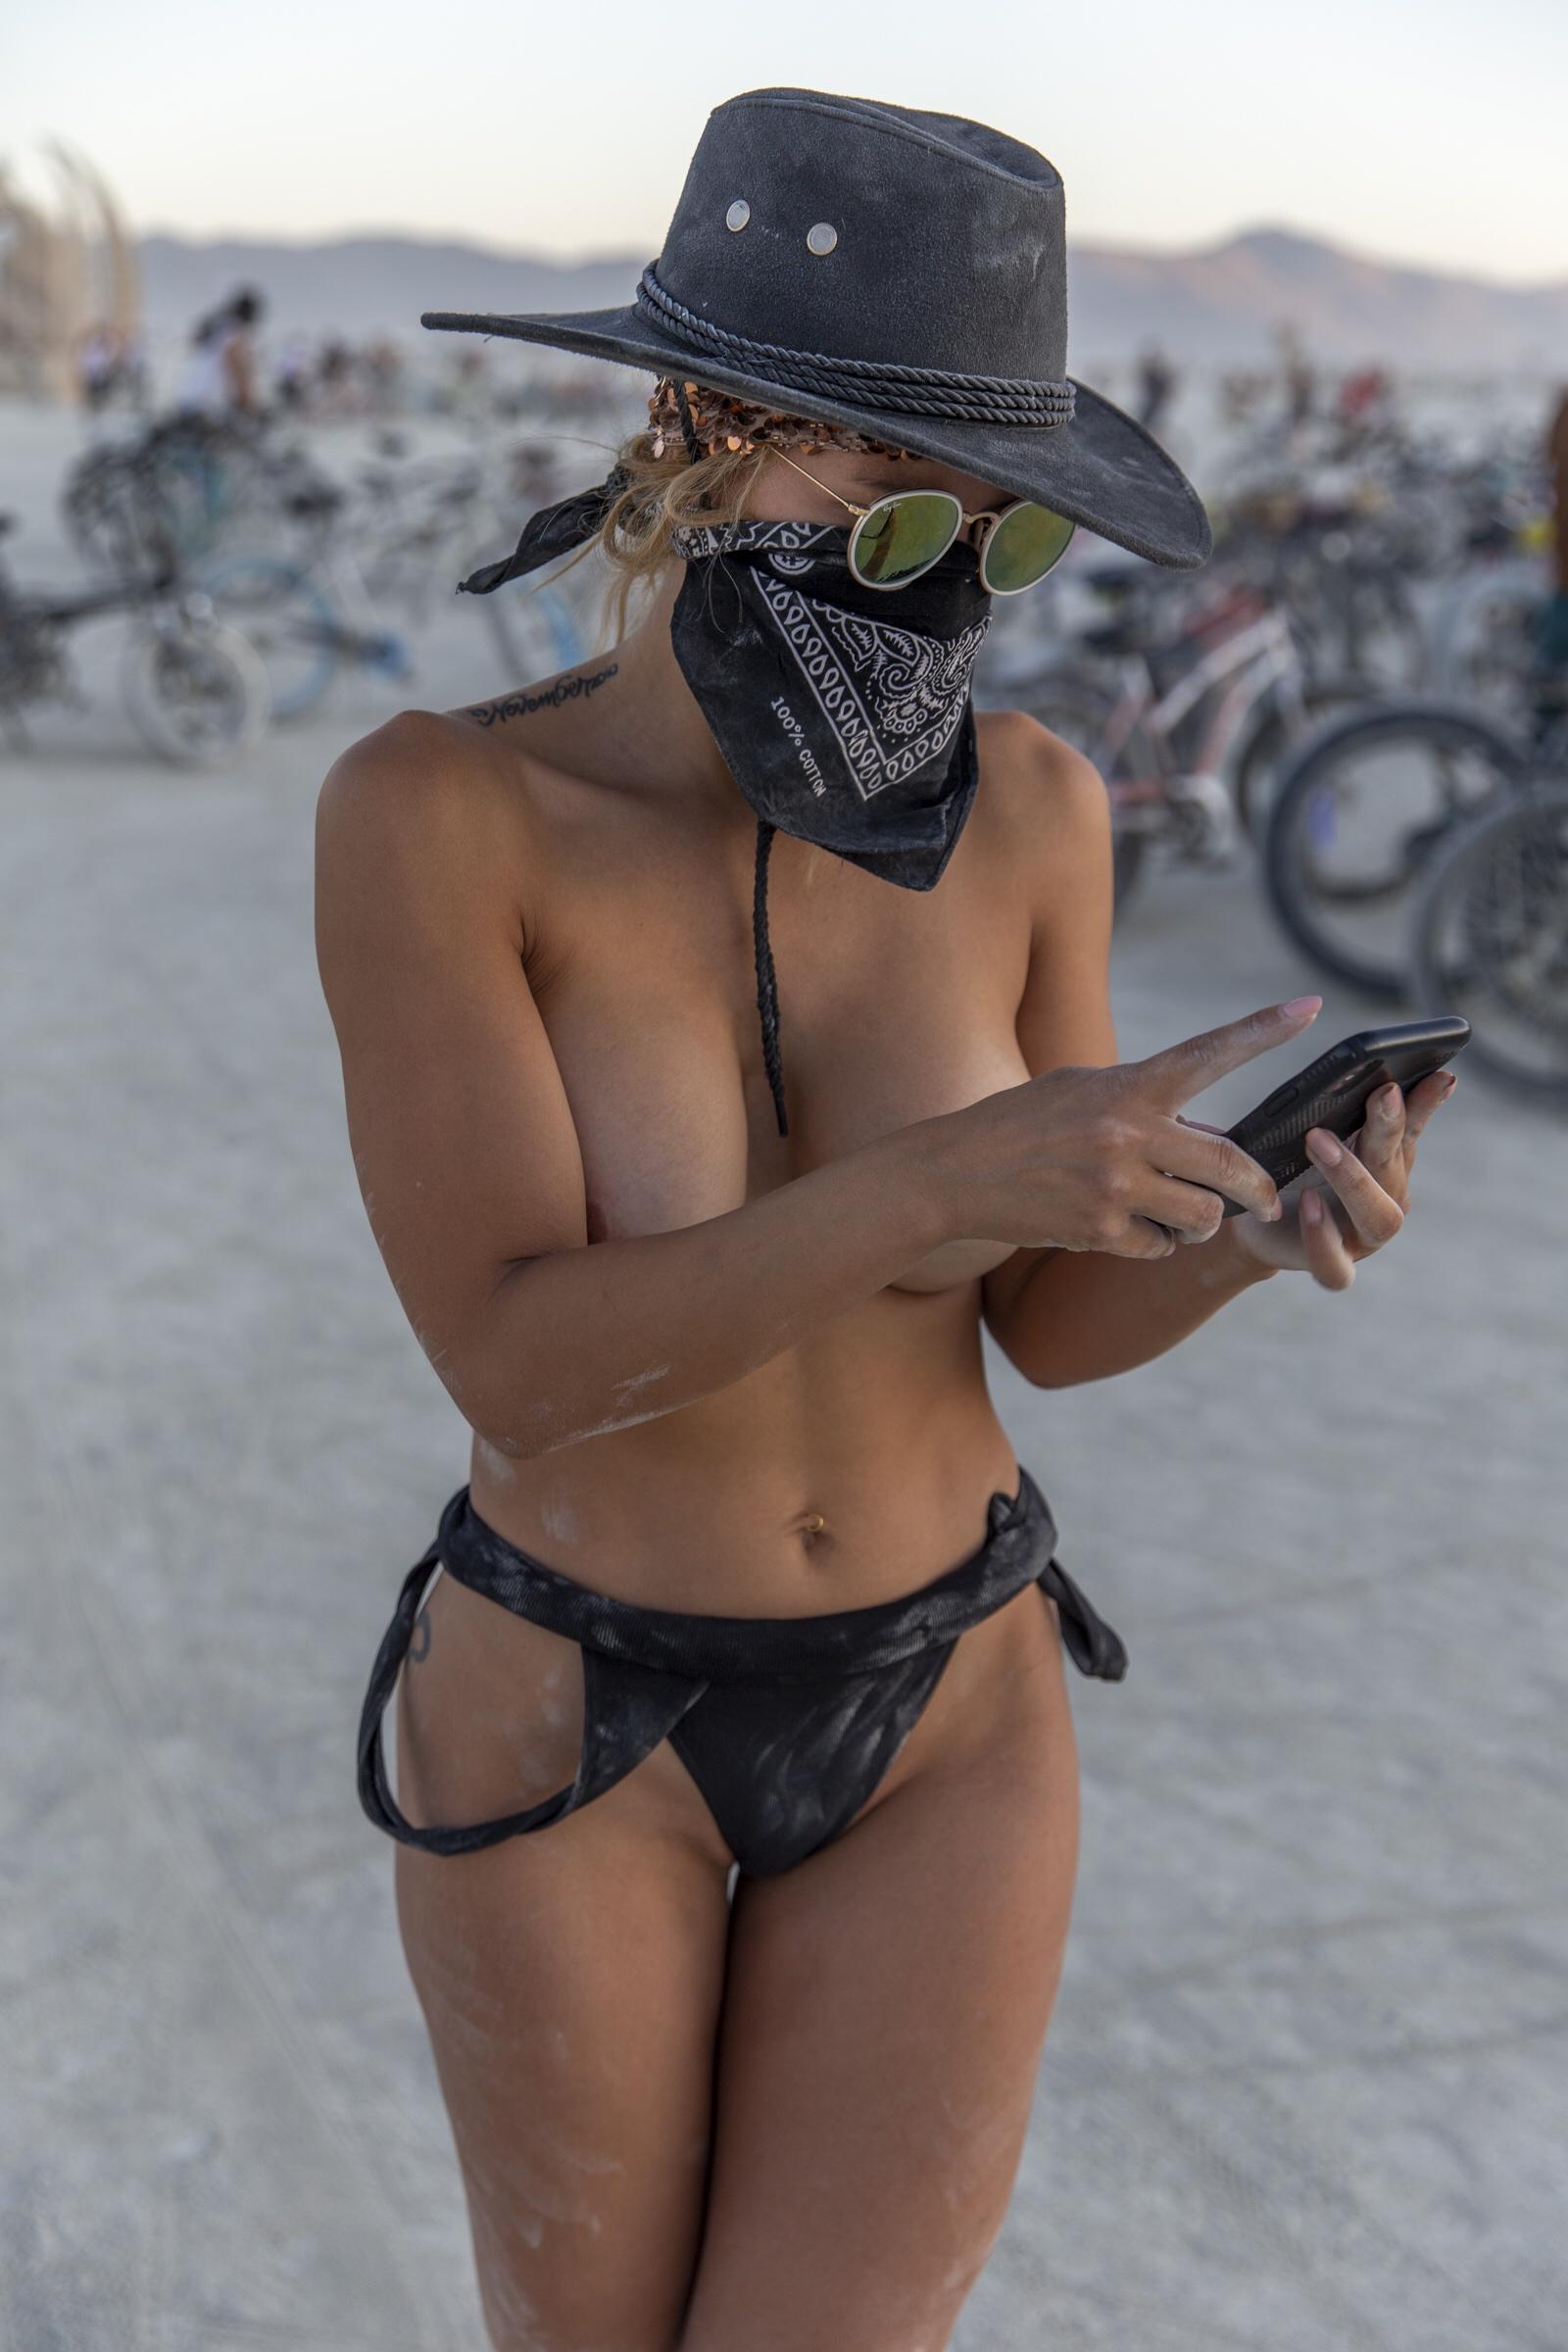 1600x2400, 211 Kb / Burning Man, пустыня, фестиваль, пыль, телефон, телефон, маска, платок, очки